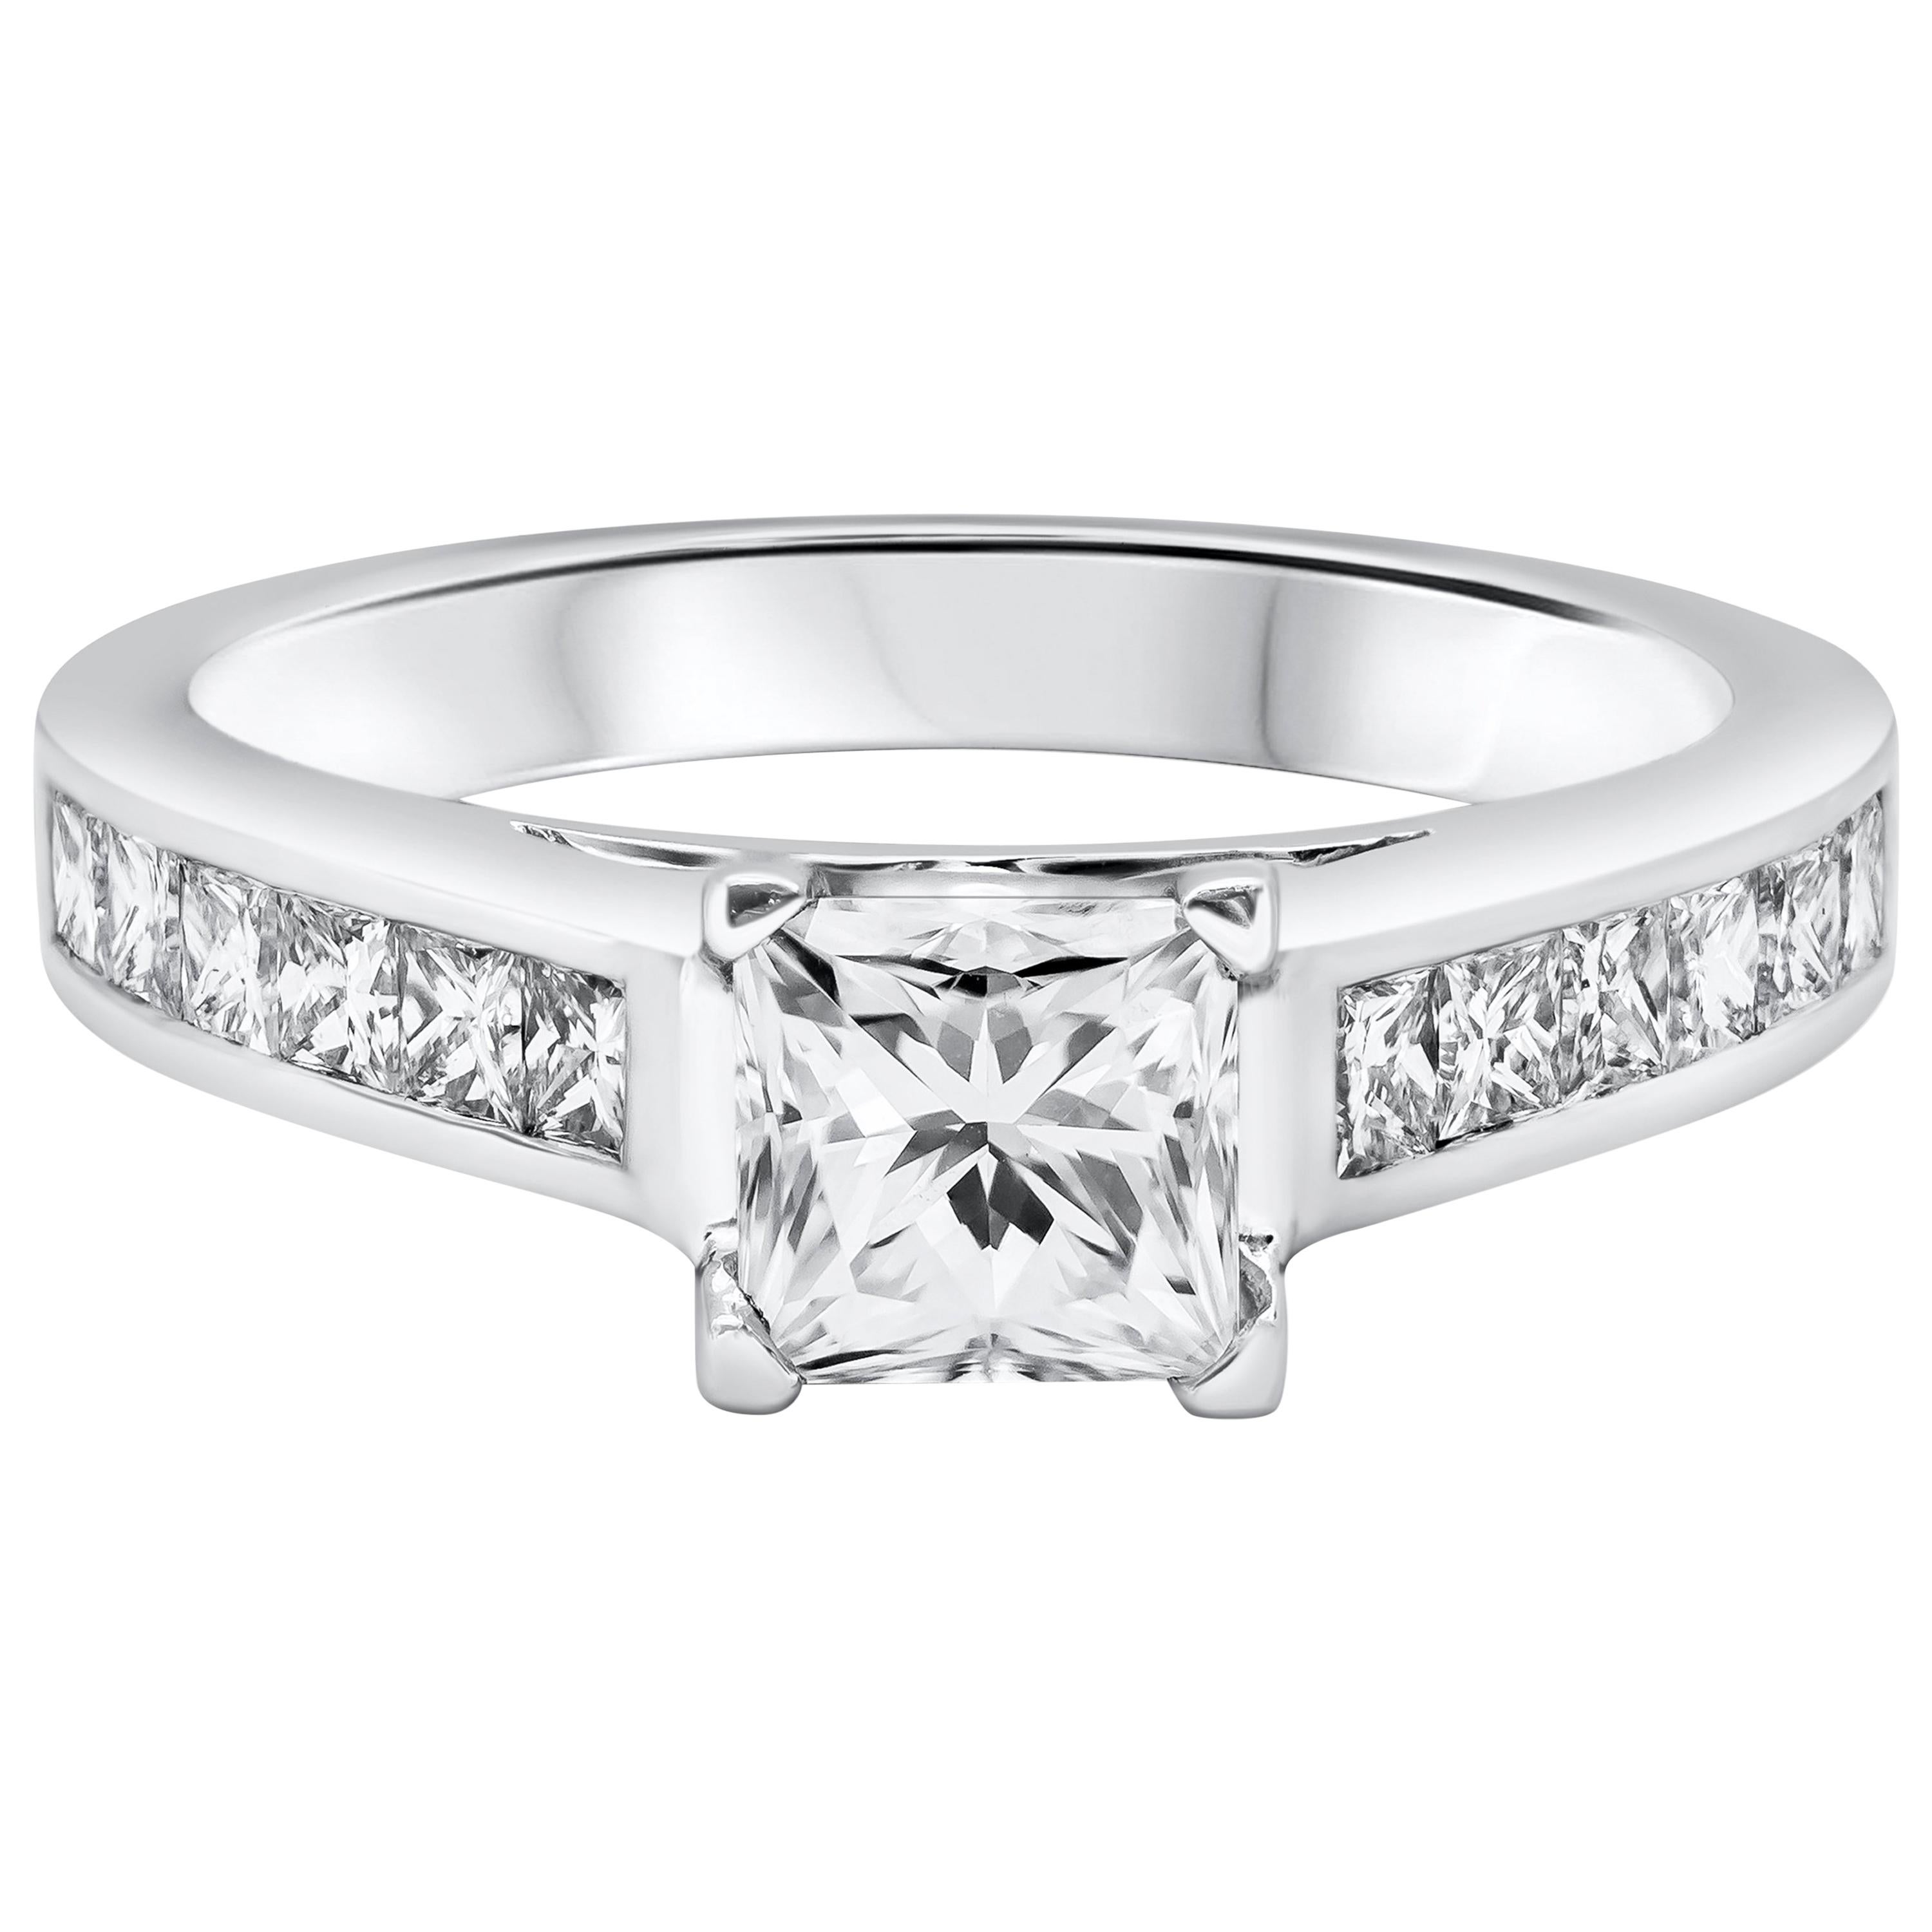 Roman Malakov 1.67 Carats Total Princess Cut Diamond Channel Engagement Ring